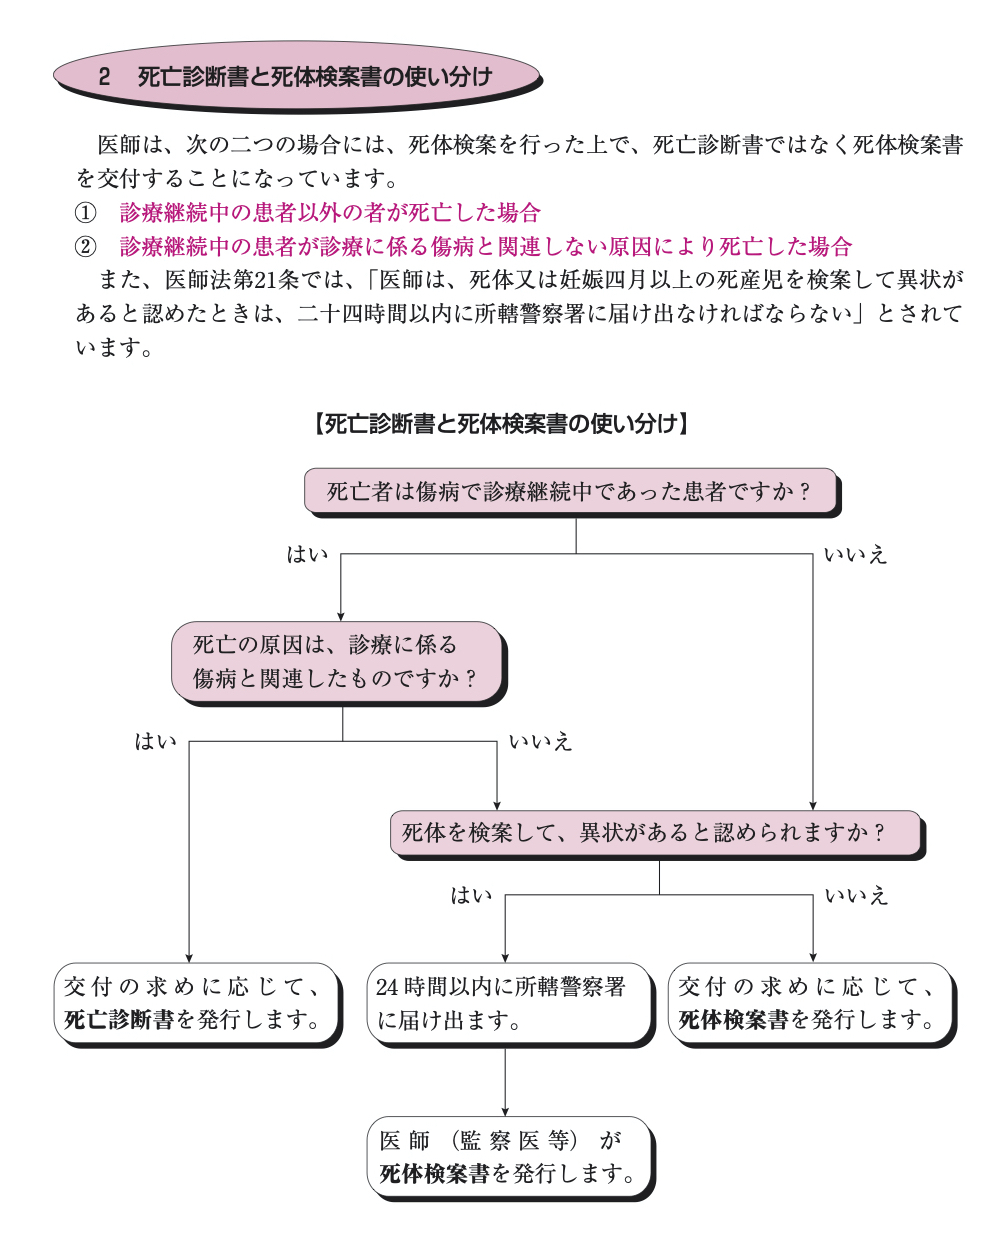 https://houigaku.blog/houigakublog/manual_h28_tsukaiwake.jpg